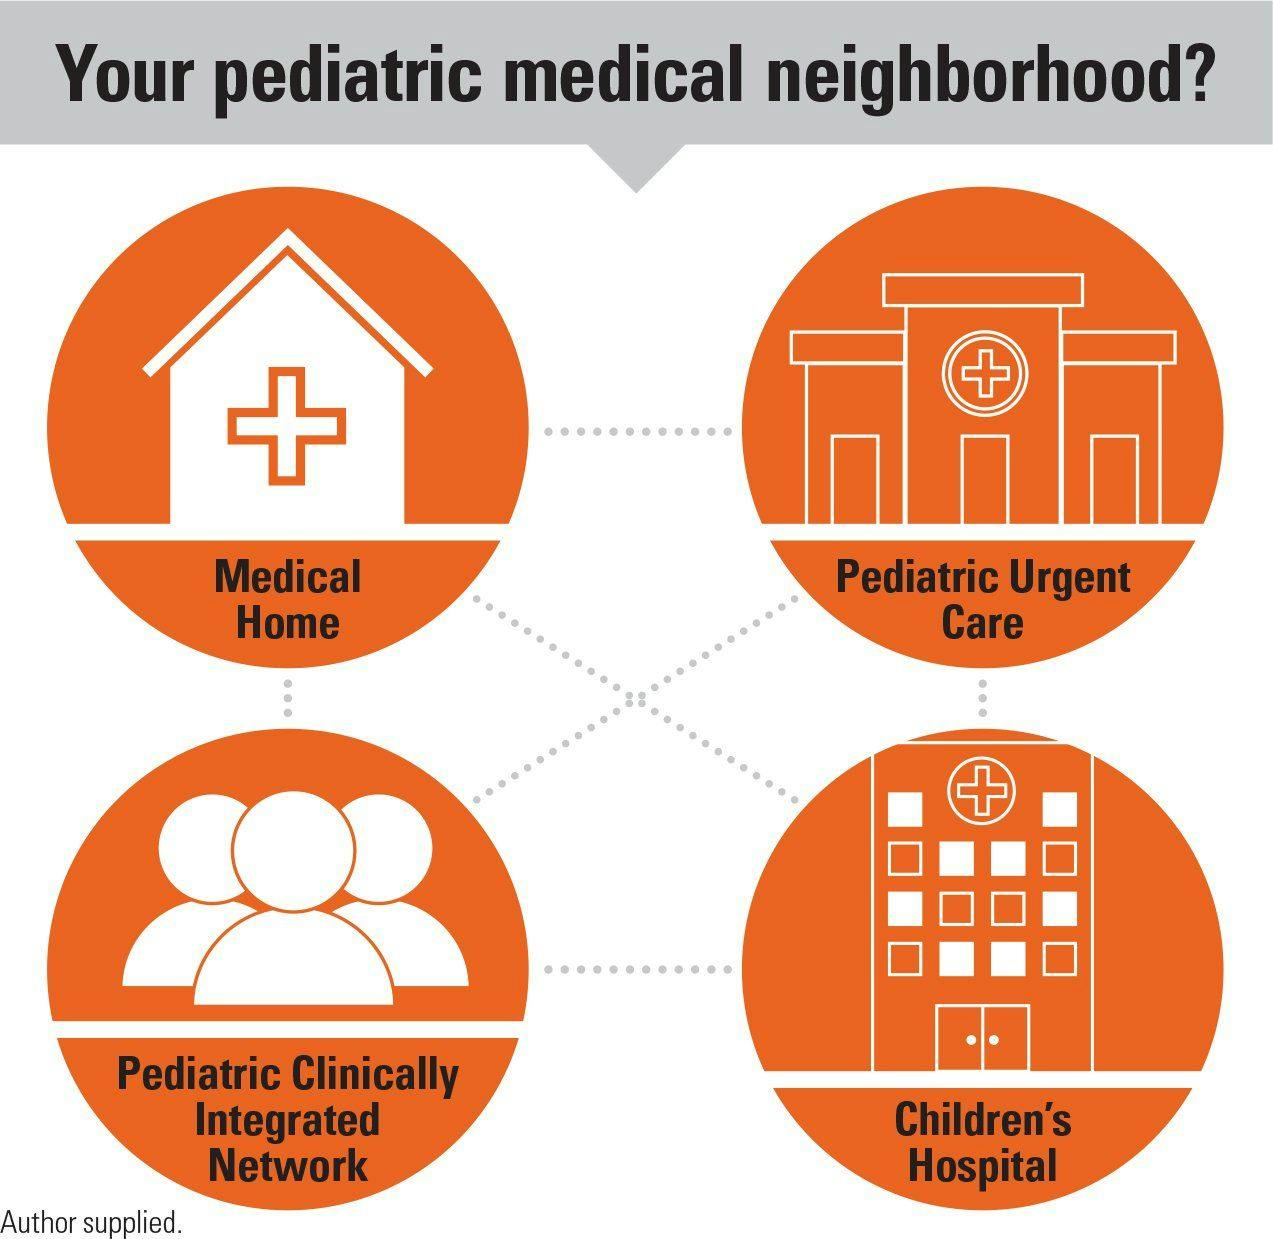 Your pediatric medical neighborhood?